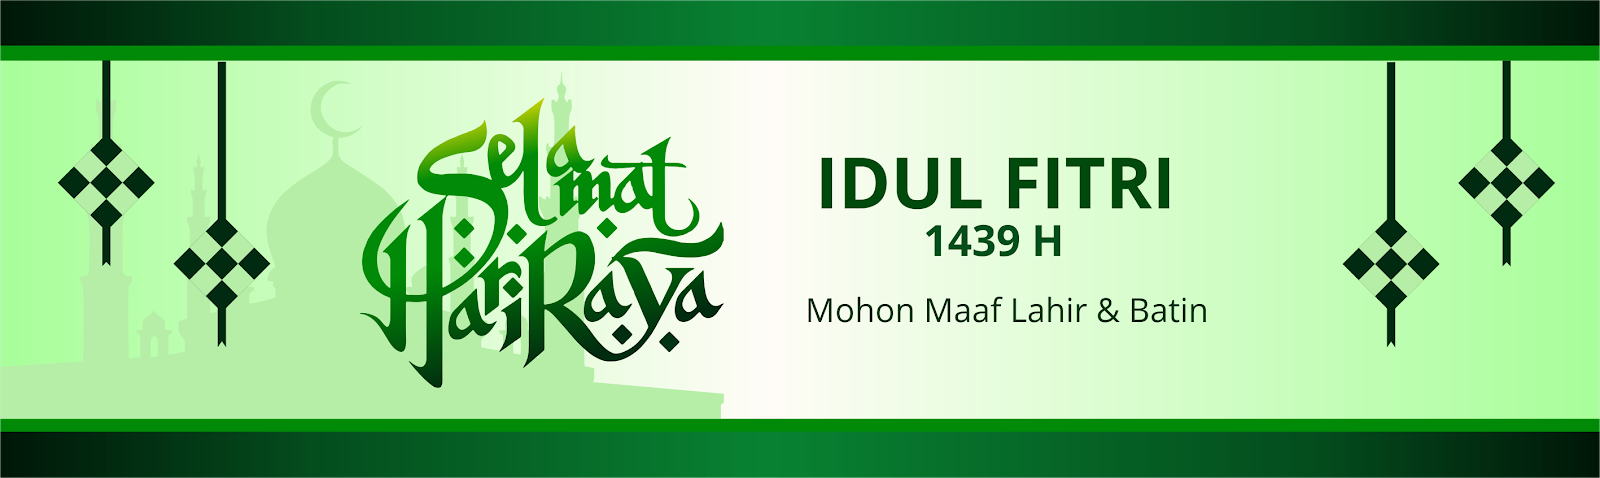 Desain Banner Hari Raya Idul Fitri 1439 H Format CDR 